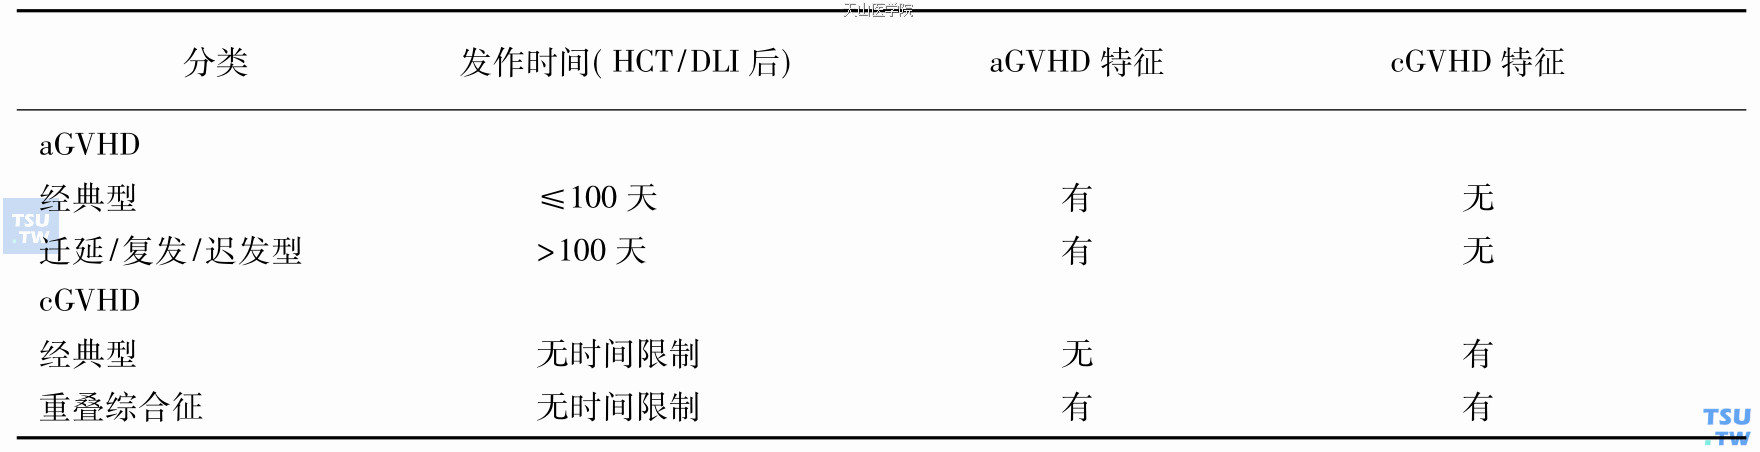 GVHD分类标准